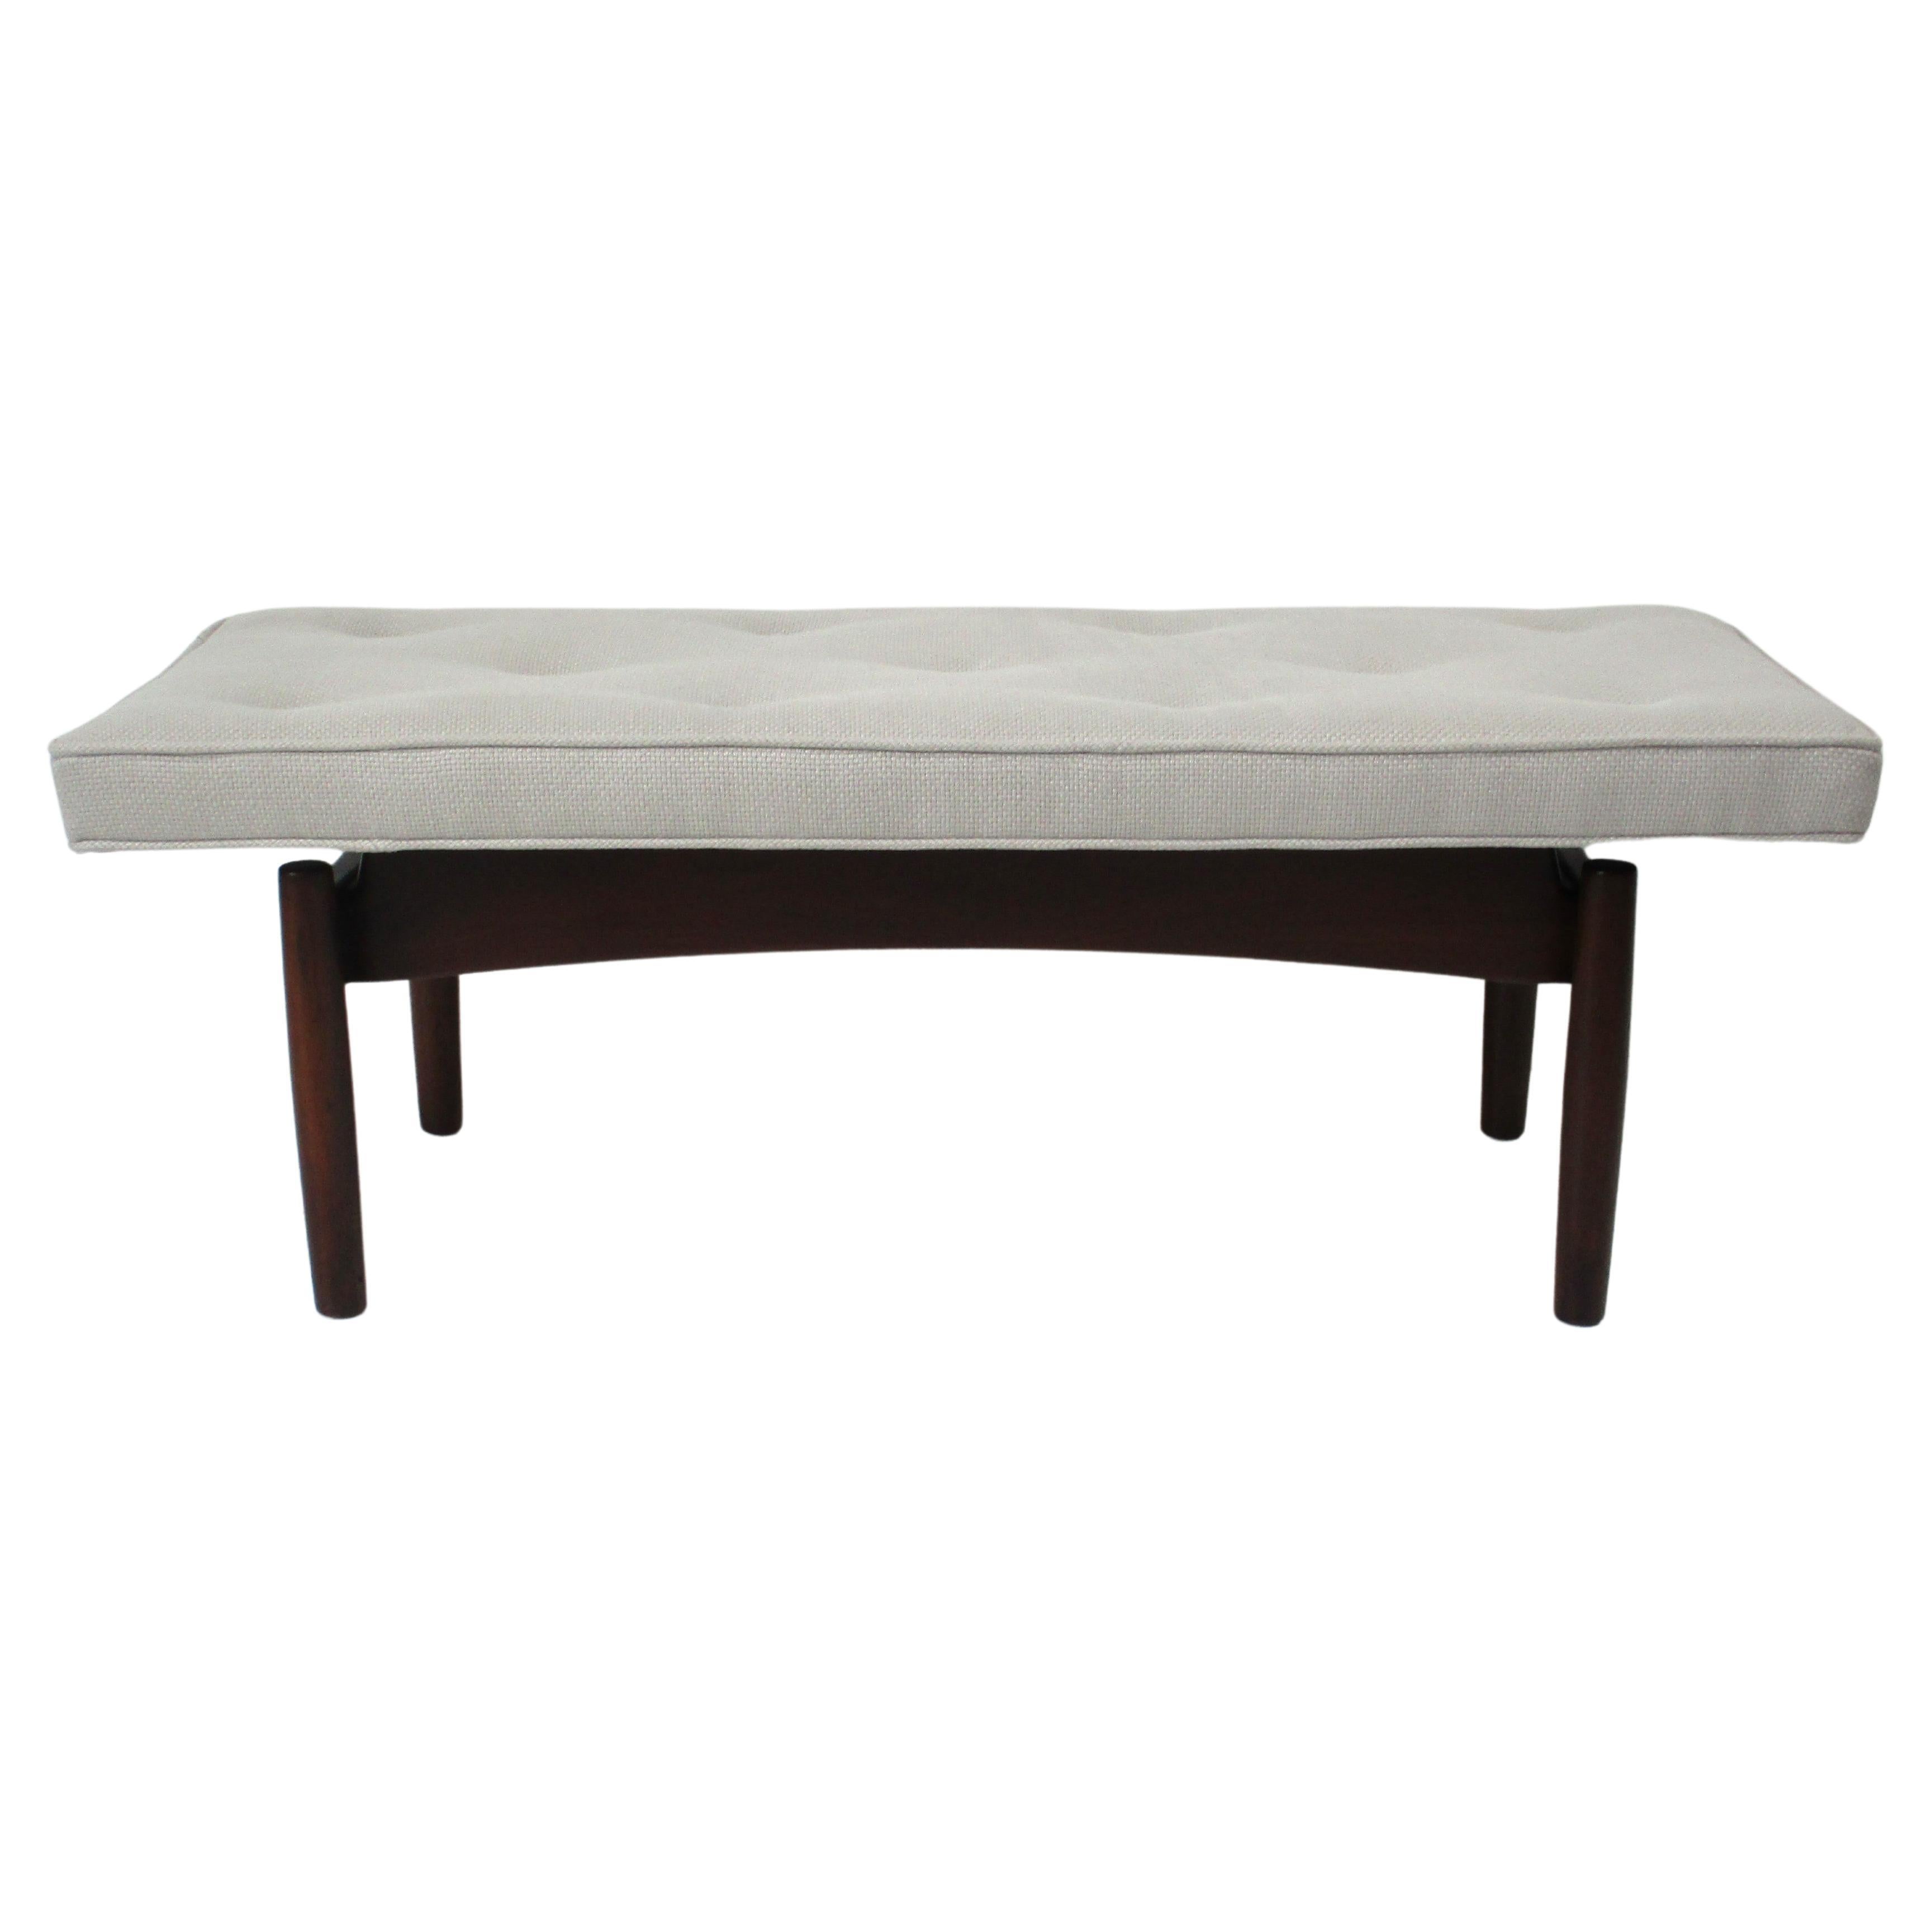 Upholstered Walnut Bench in the Style of Greta Grossman Danish Modern (B)